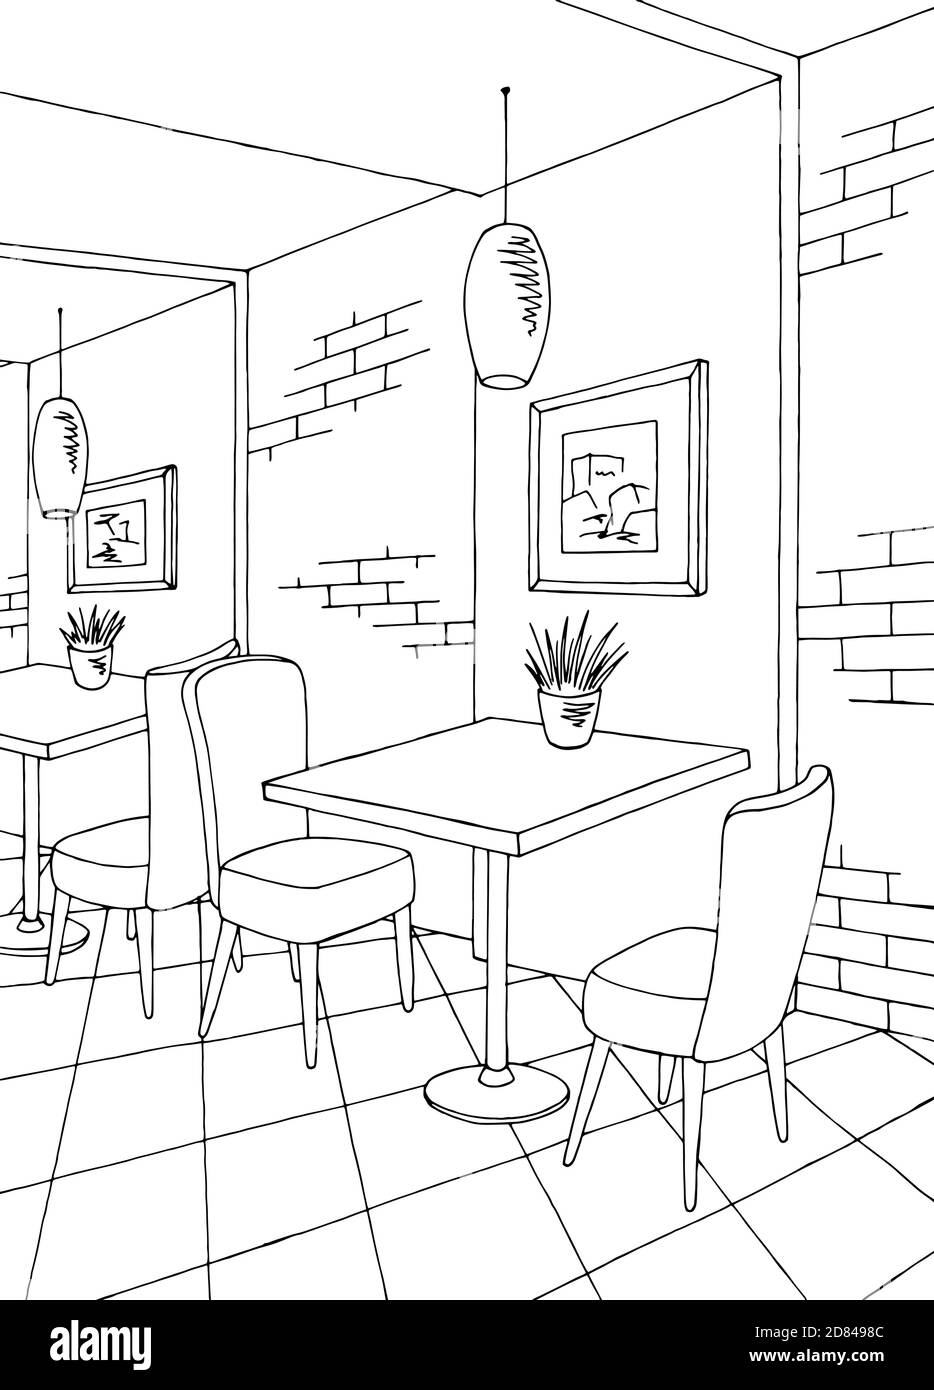 Interiors sketches: Foster's Cafe interior